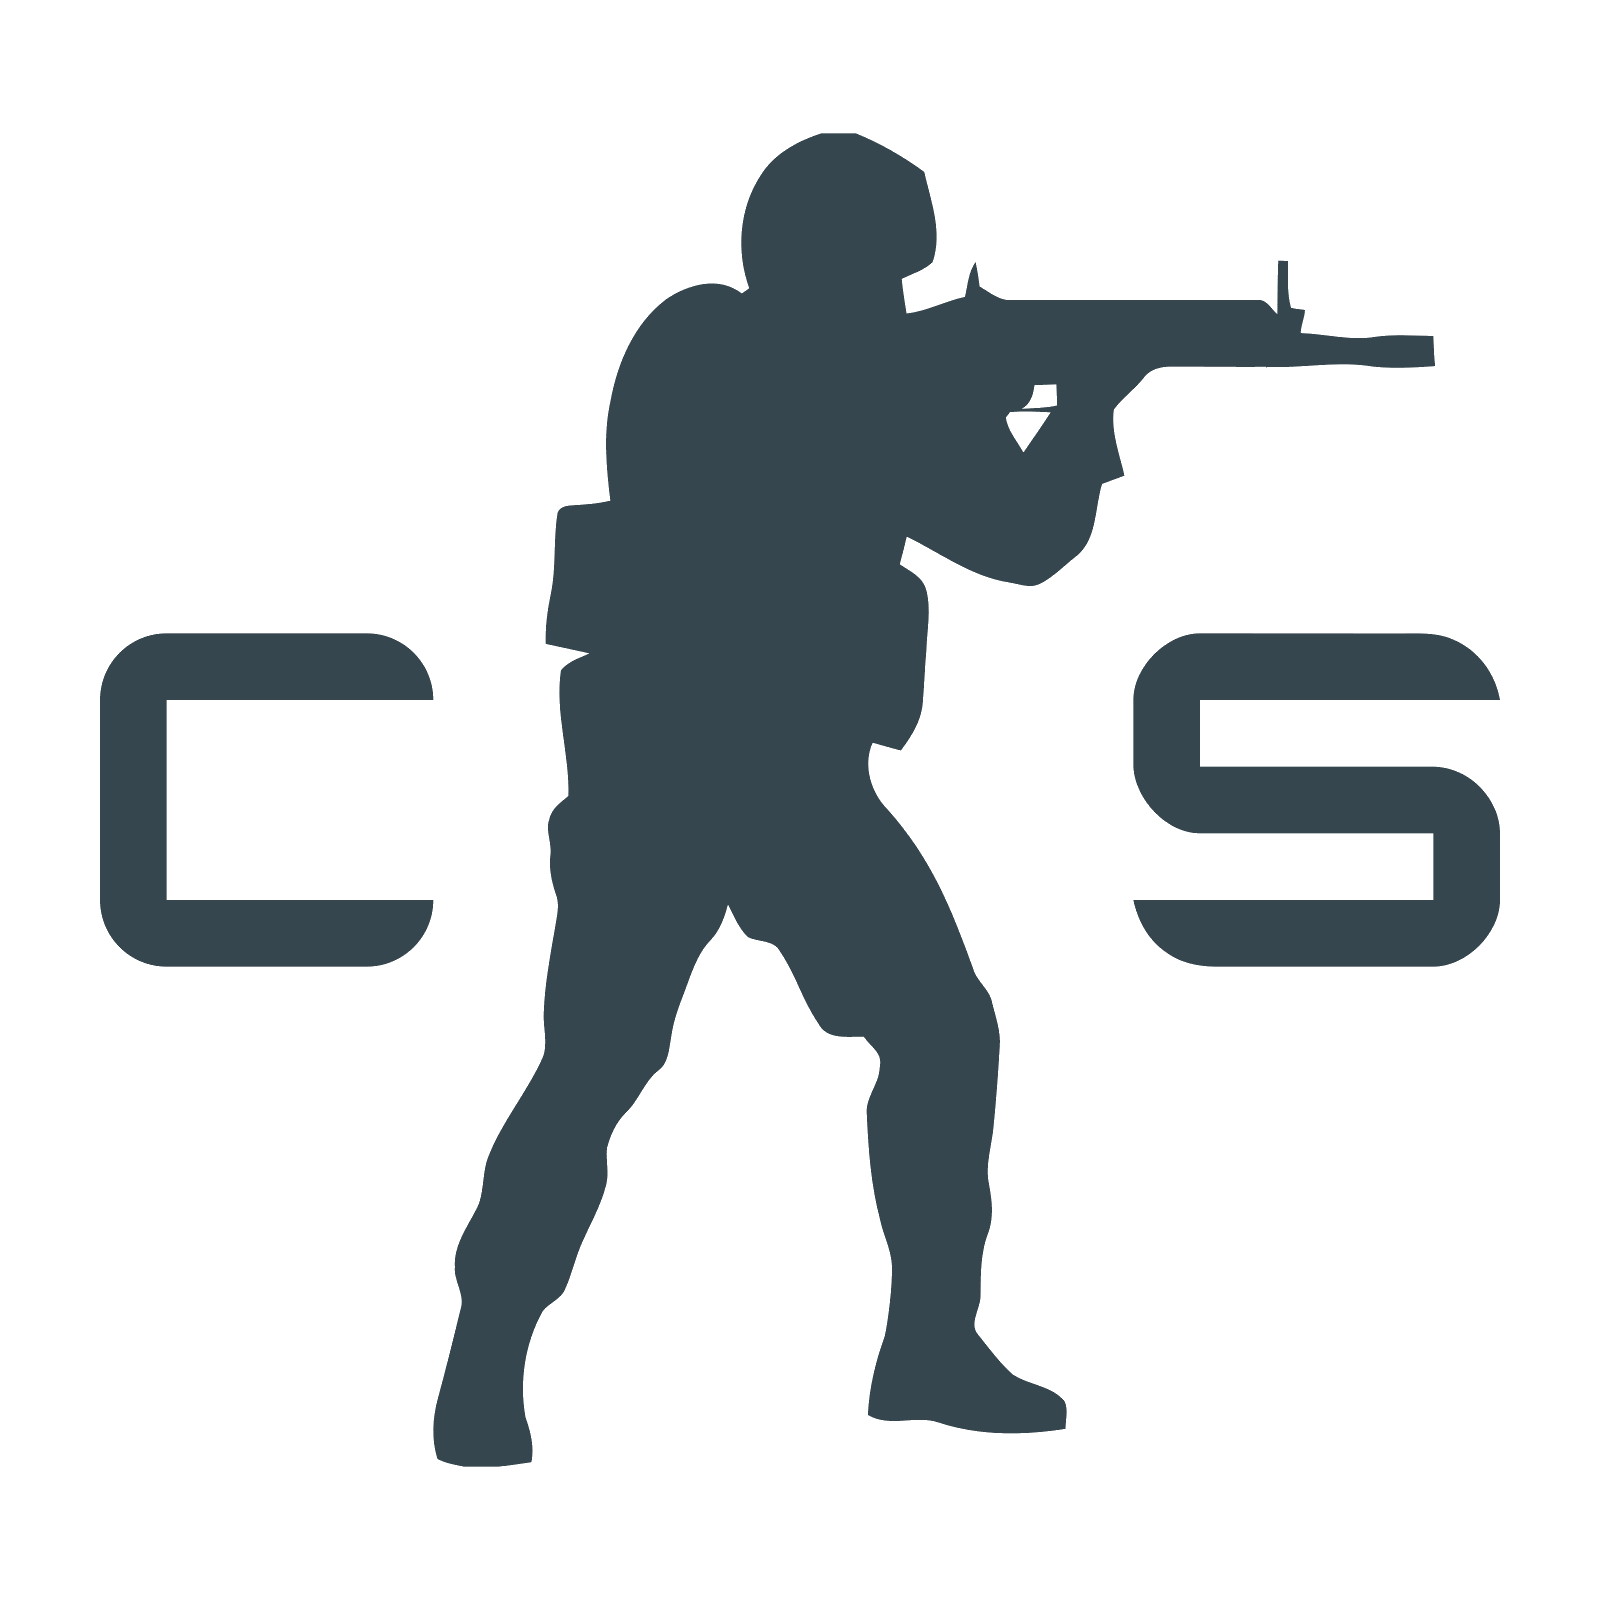 cs source logo